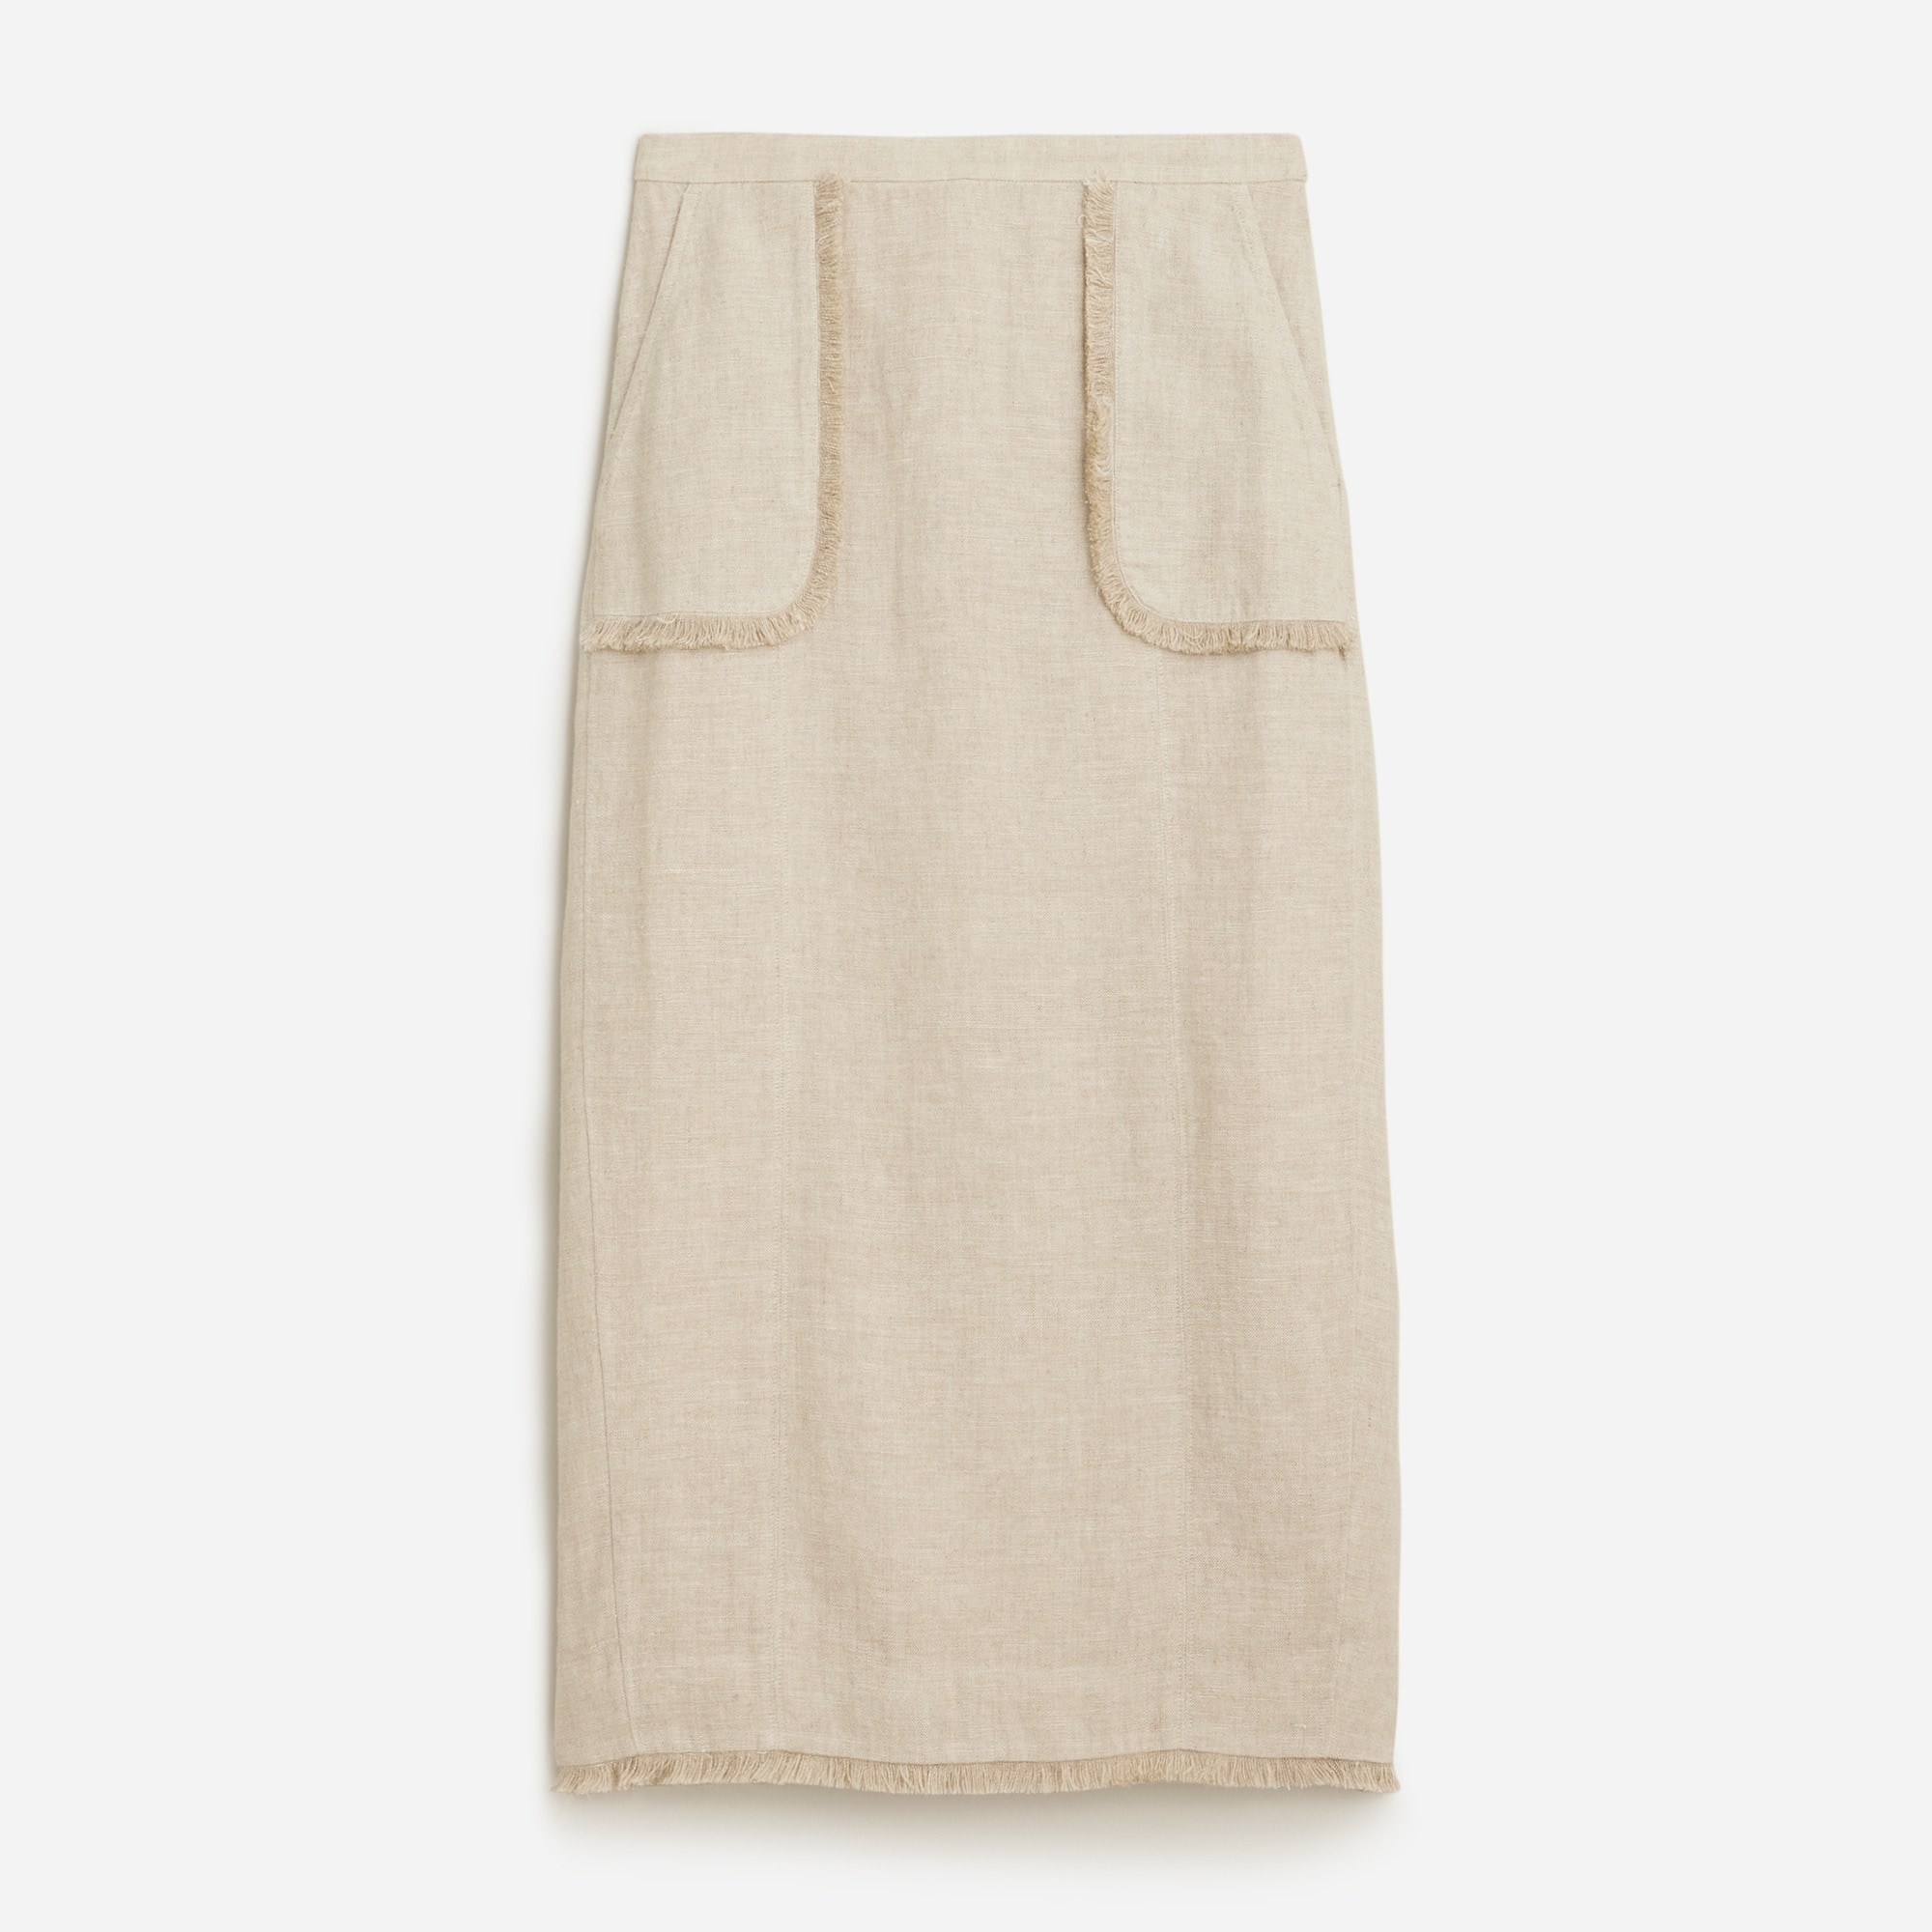  Pencil midi skirt in heavyweight linen